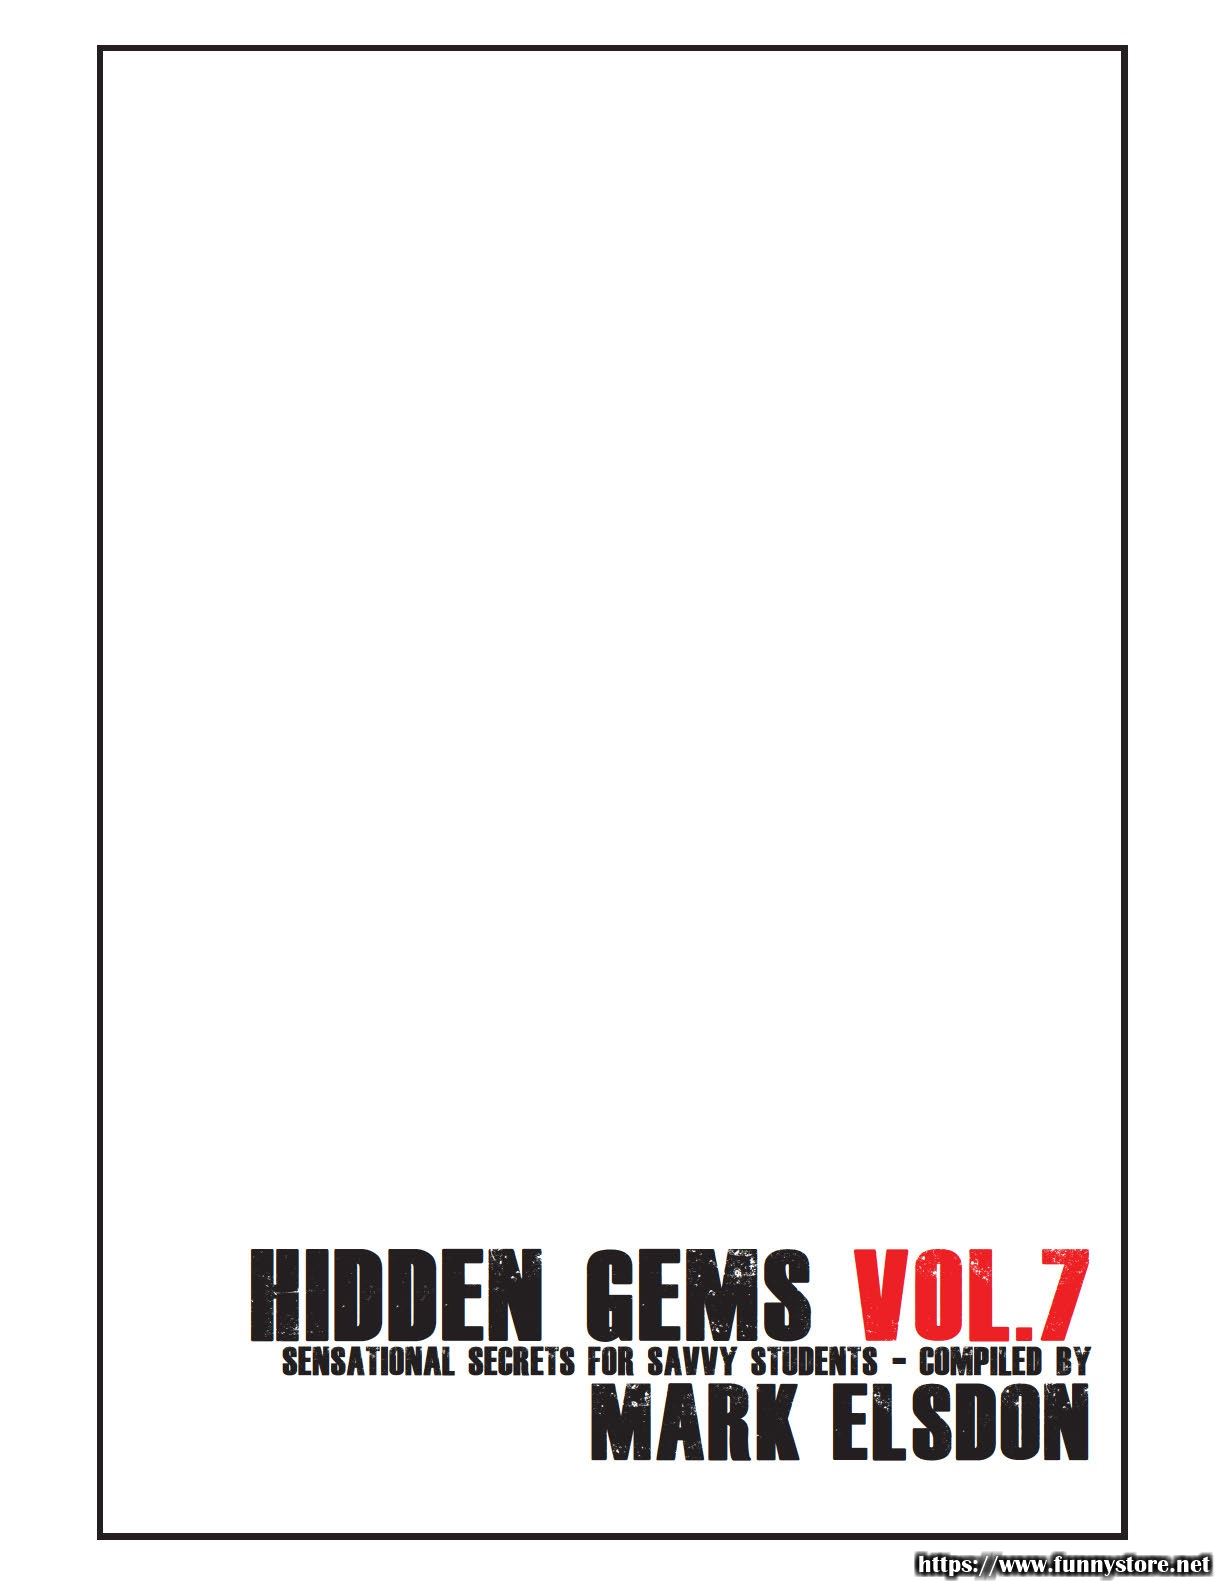 Mark Elsdon - Hidden Gems 7